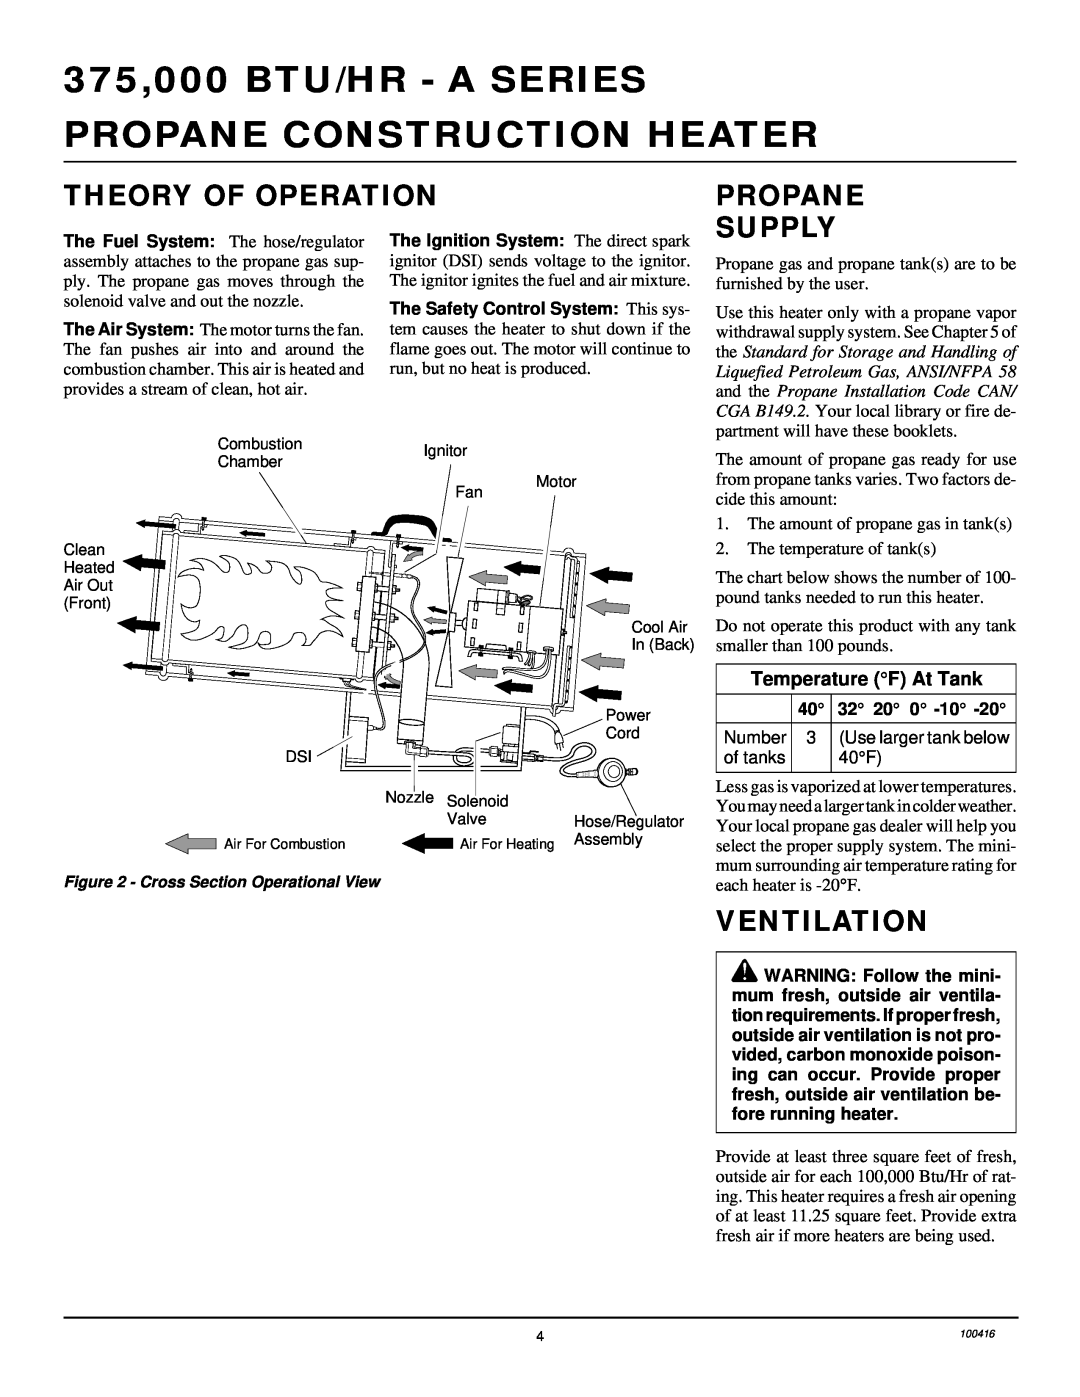 Desa BLP375A Theory Of Operation, Propane Supply, Ventilation, 375,000 BTU/HR - A SERIES, Propane Construction Heater 